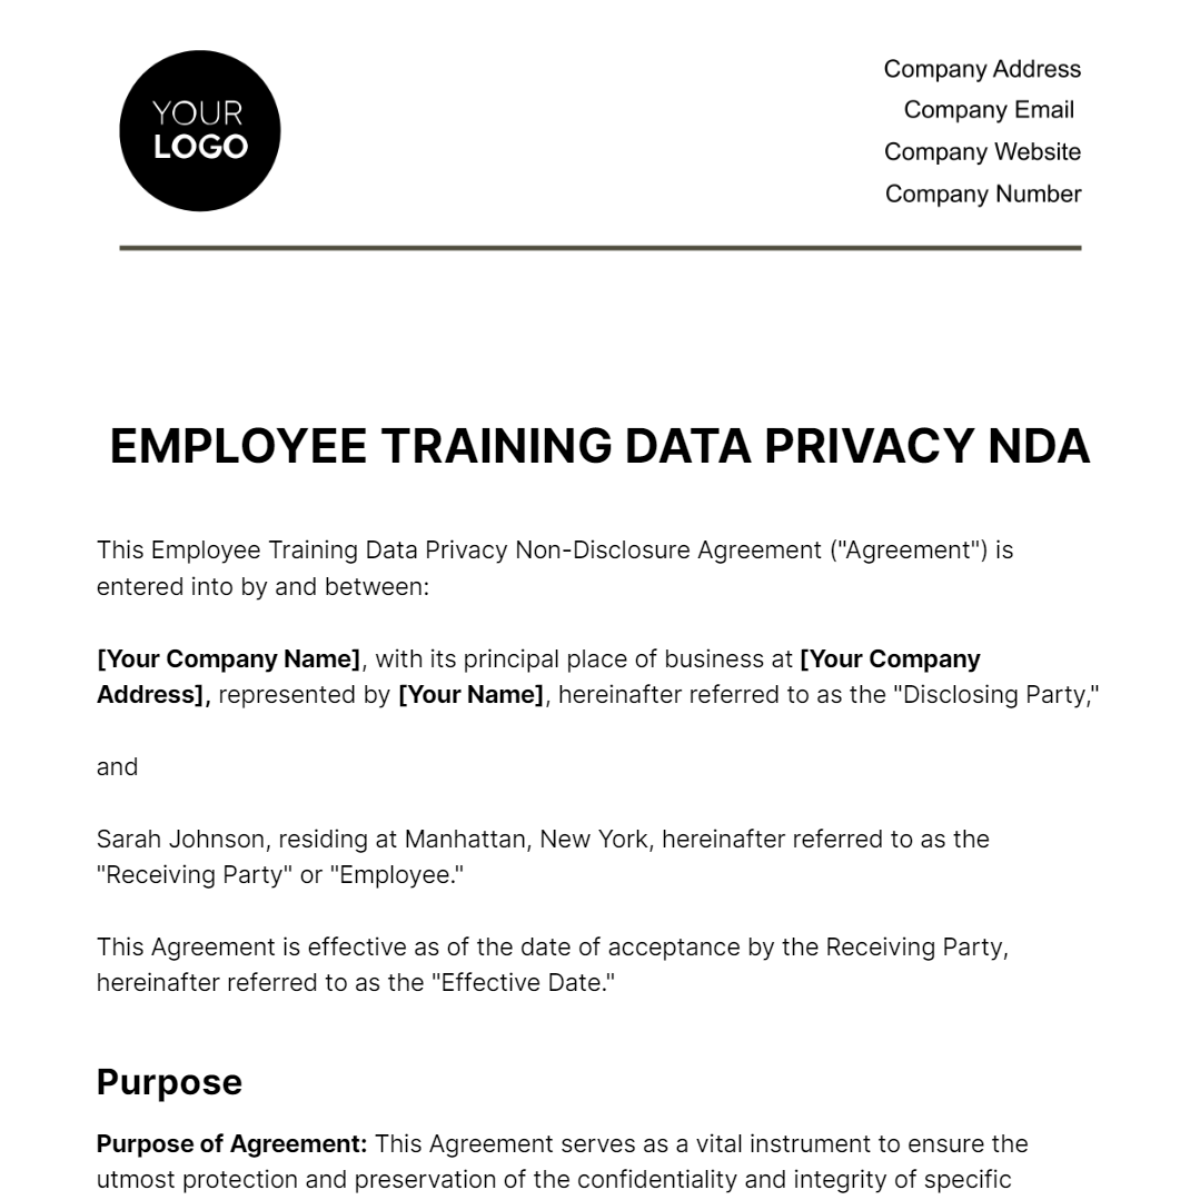 Employee Training Data Privacy NDA HR Template